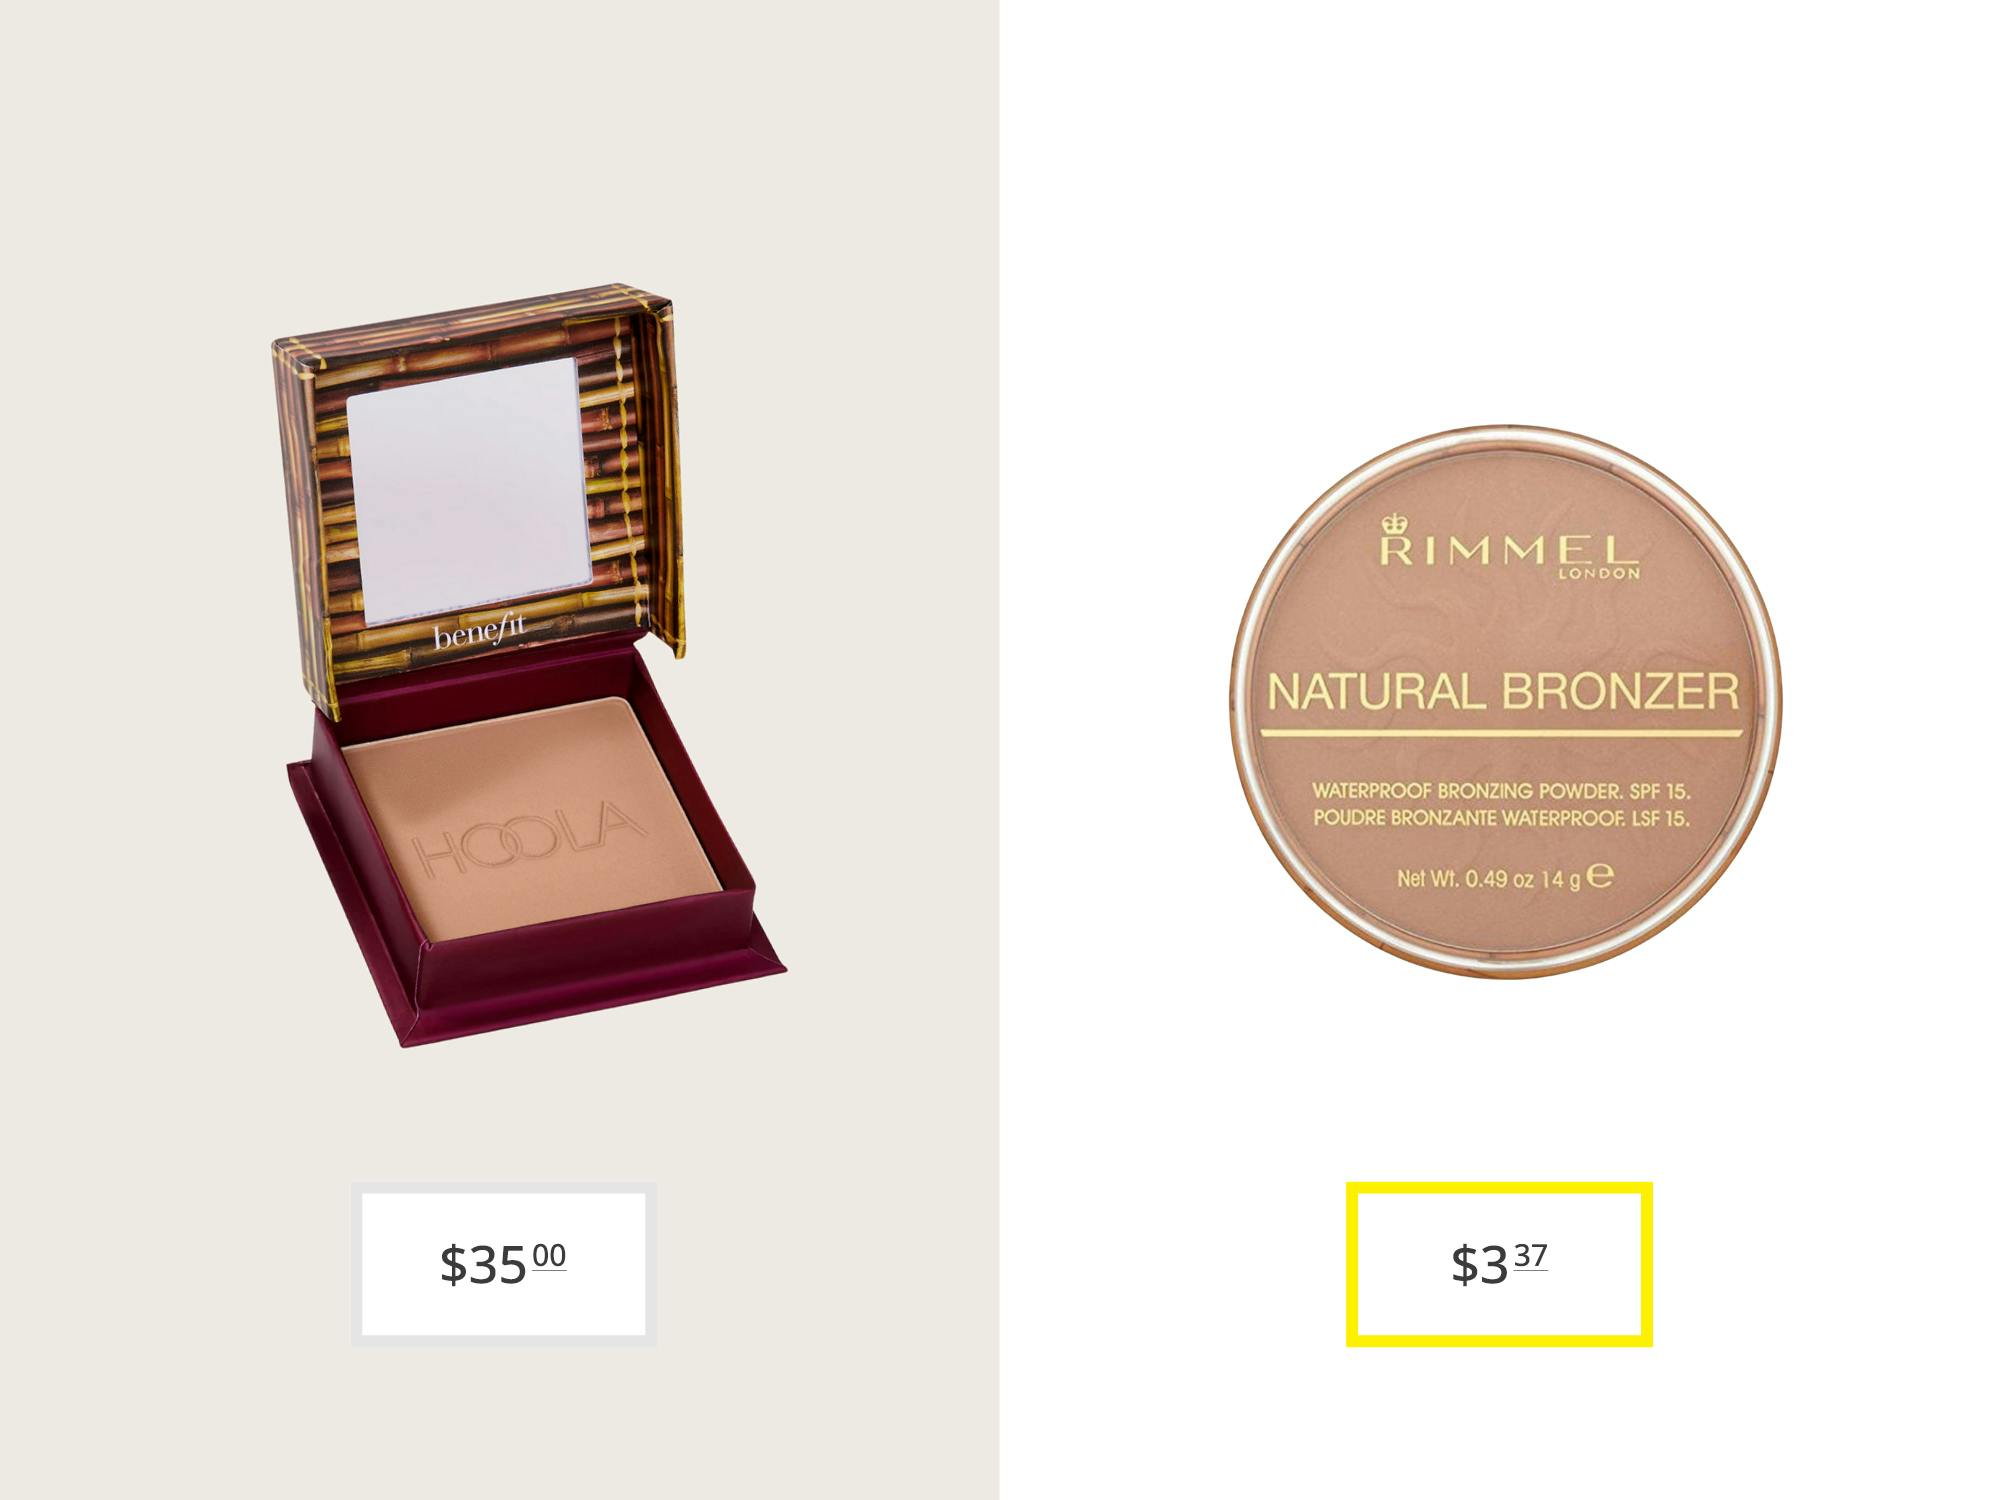 benefit cosmetics hoola bronzer and rimmel natural bronzer price comparison graphic